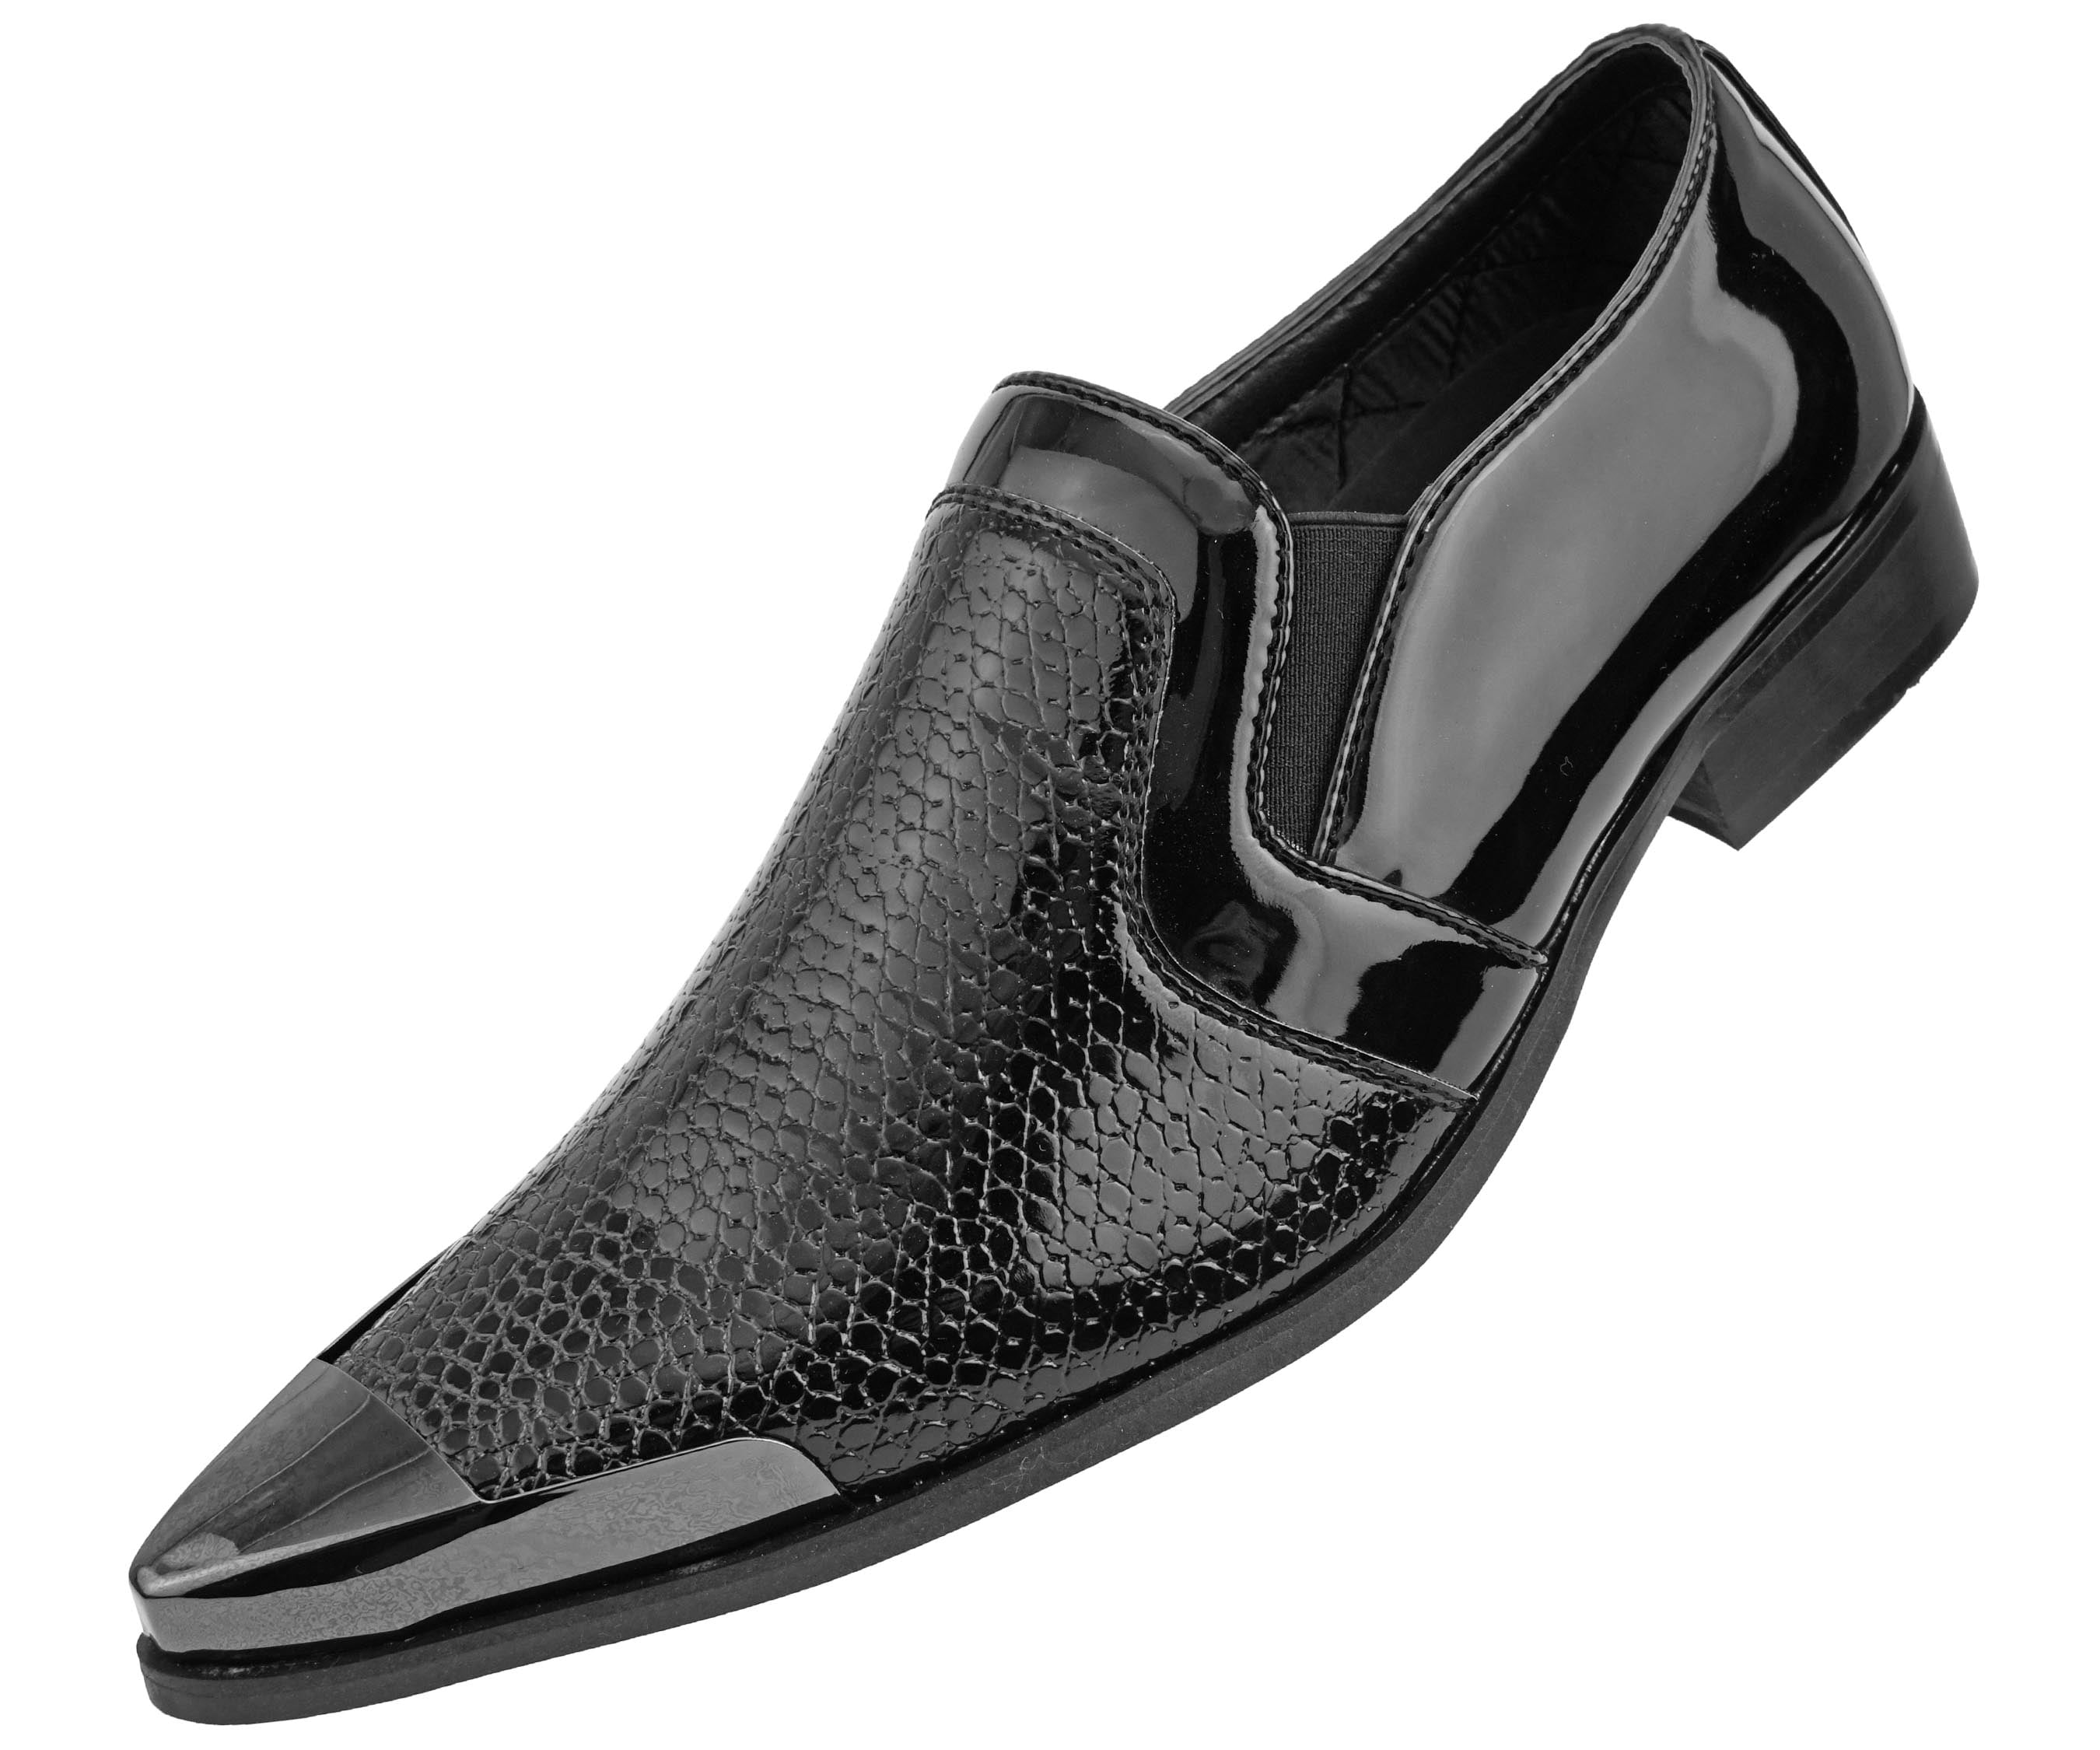 Buy > men's dress shoes with metal tips > in stock